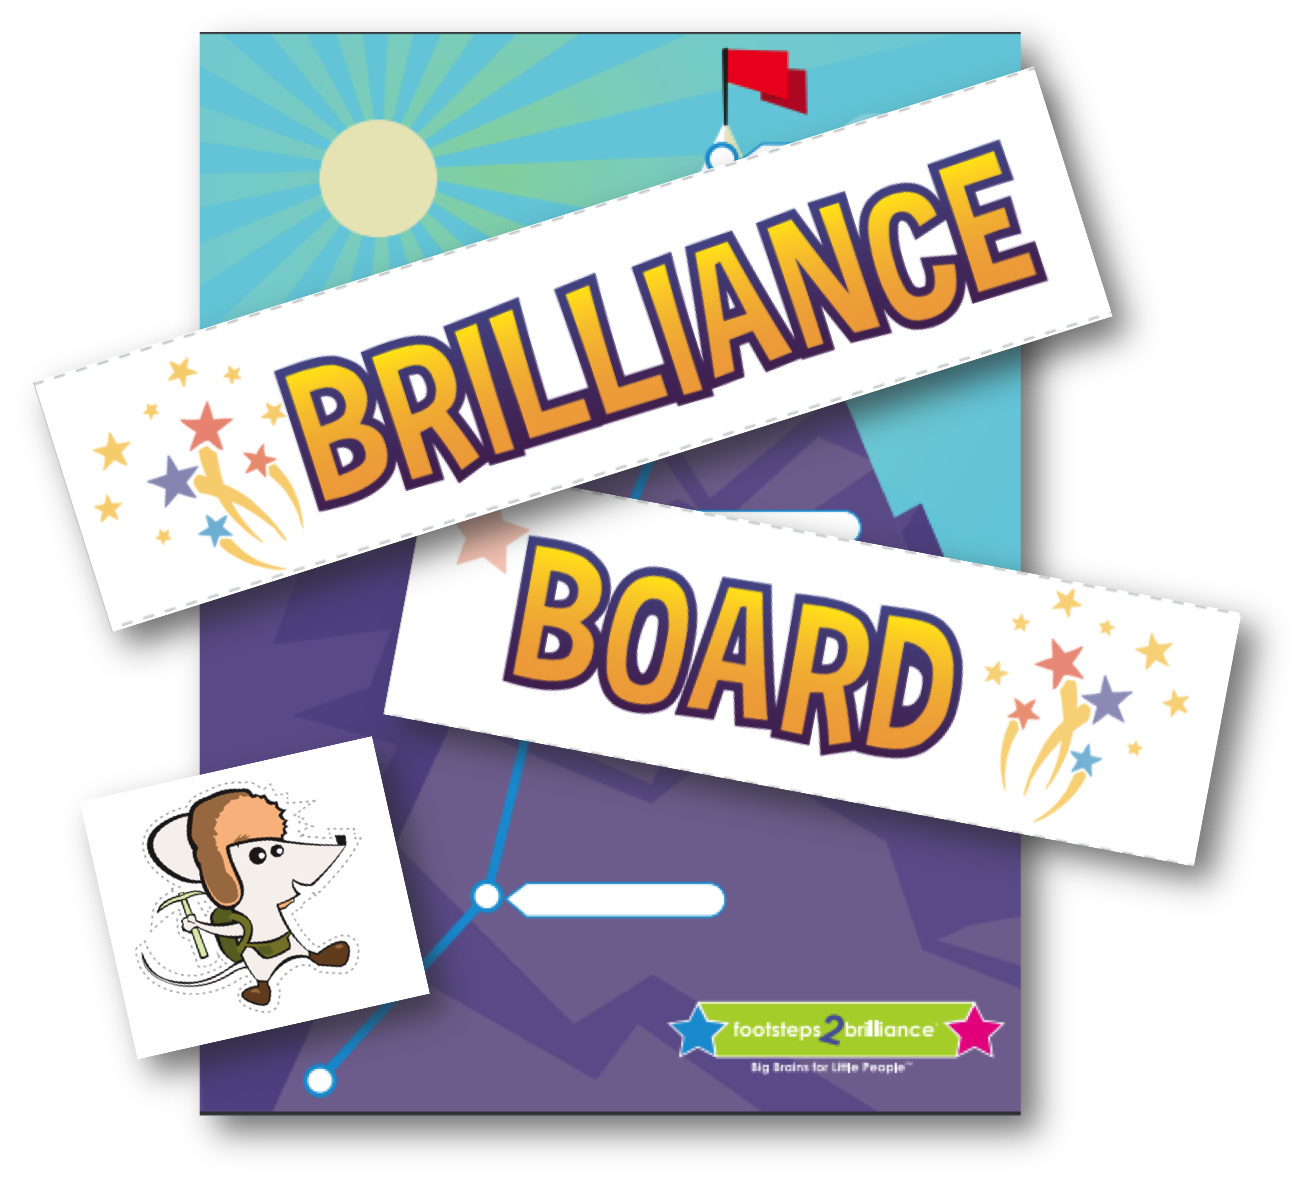 New Brilliance Board Artwork in Teacher Toolkits